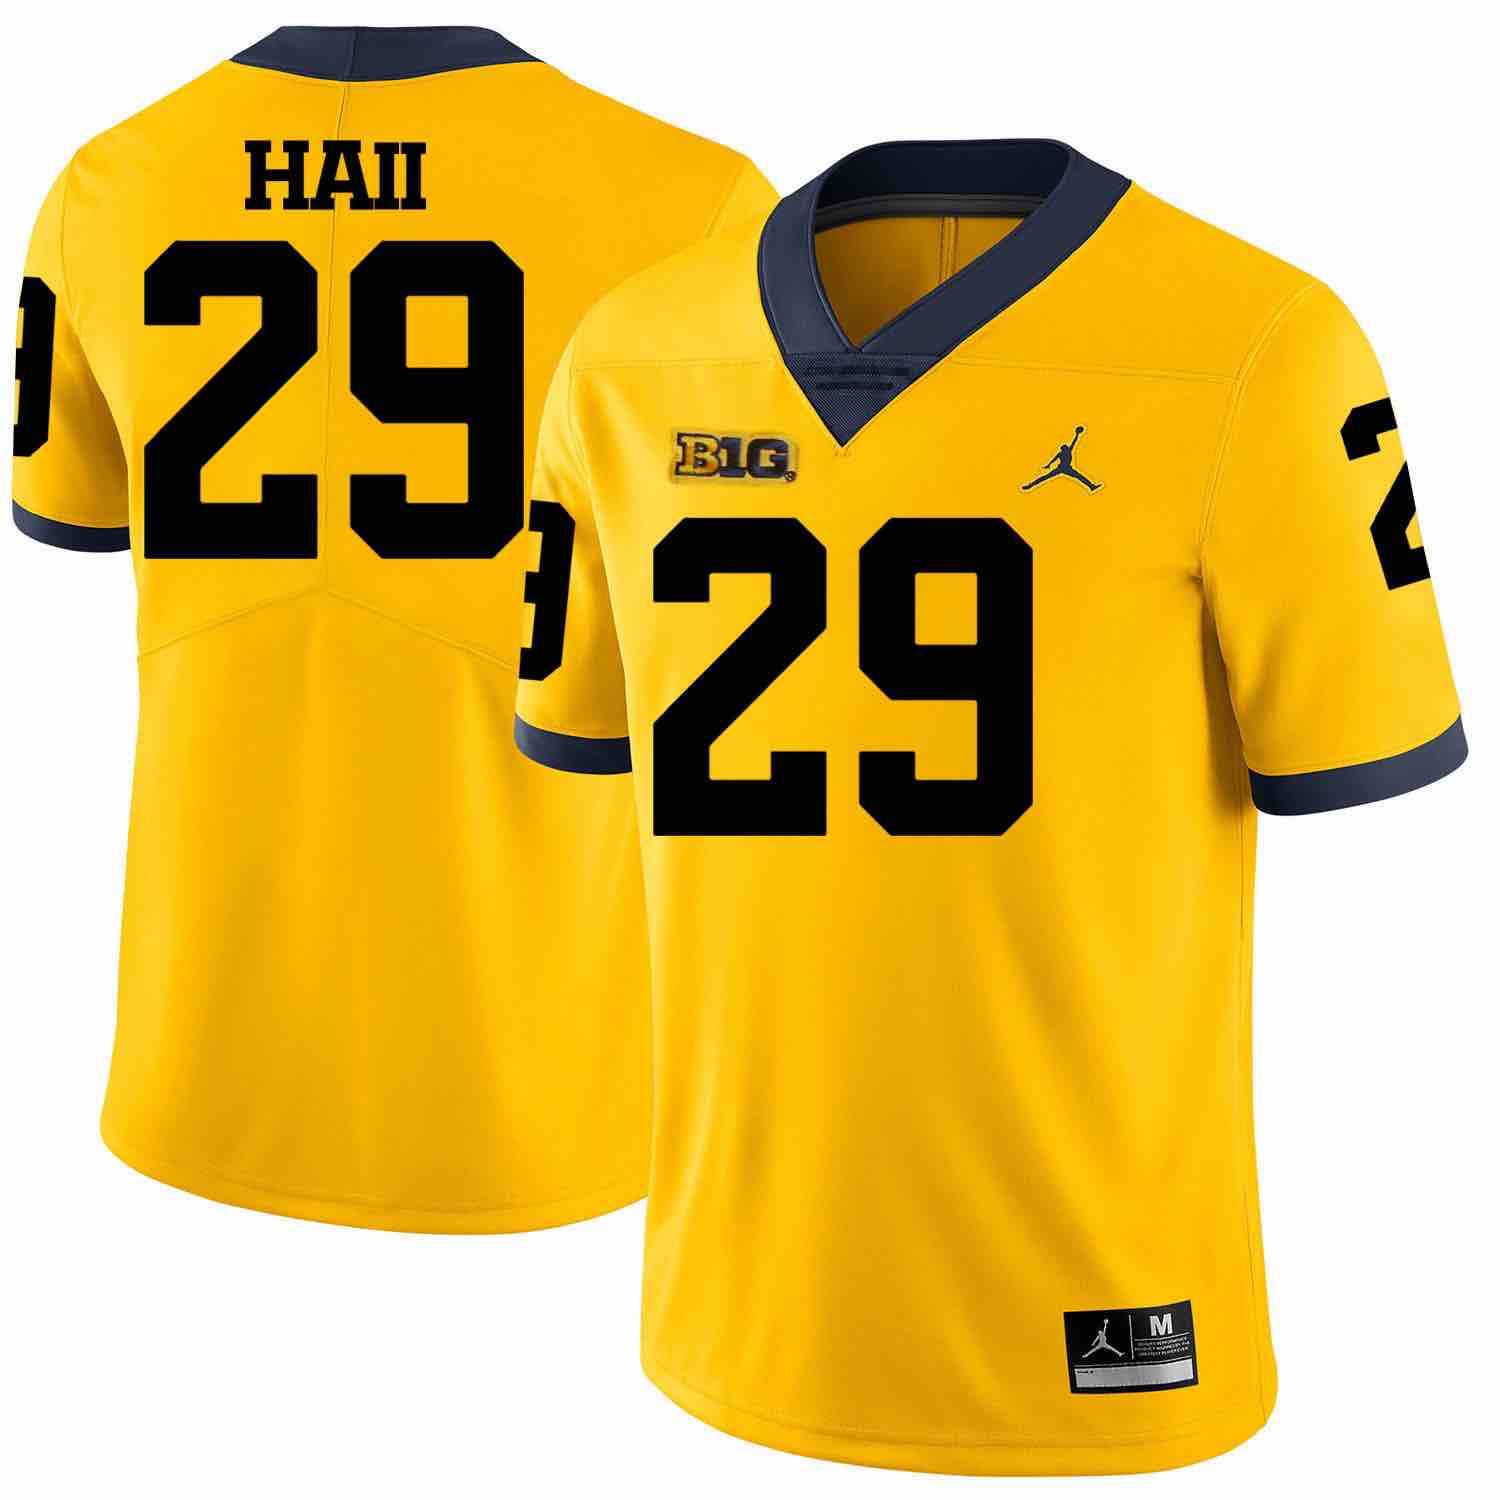 NCAA Michigan Wolverines #29 Haii Yellow Football Jersey